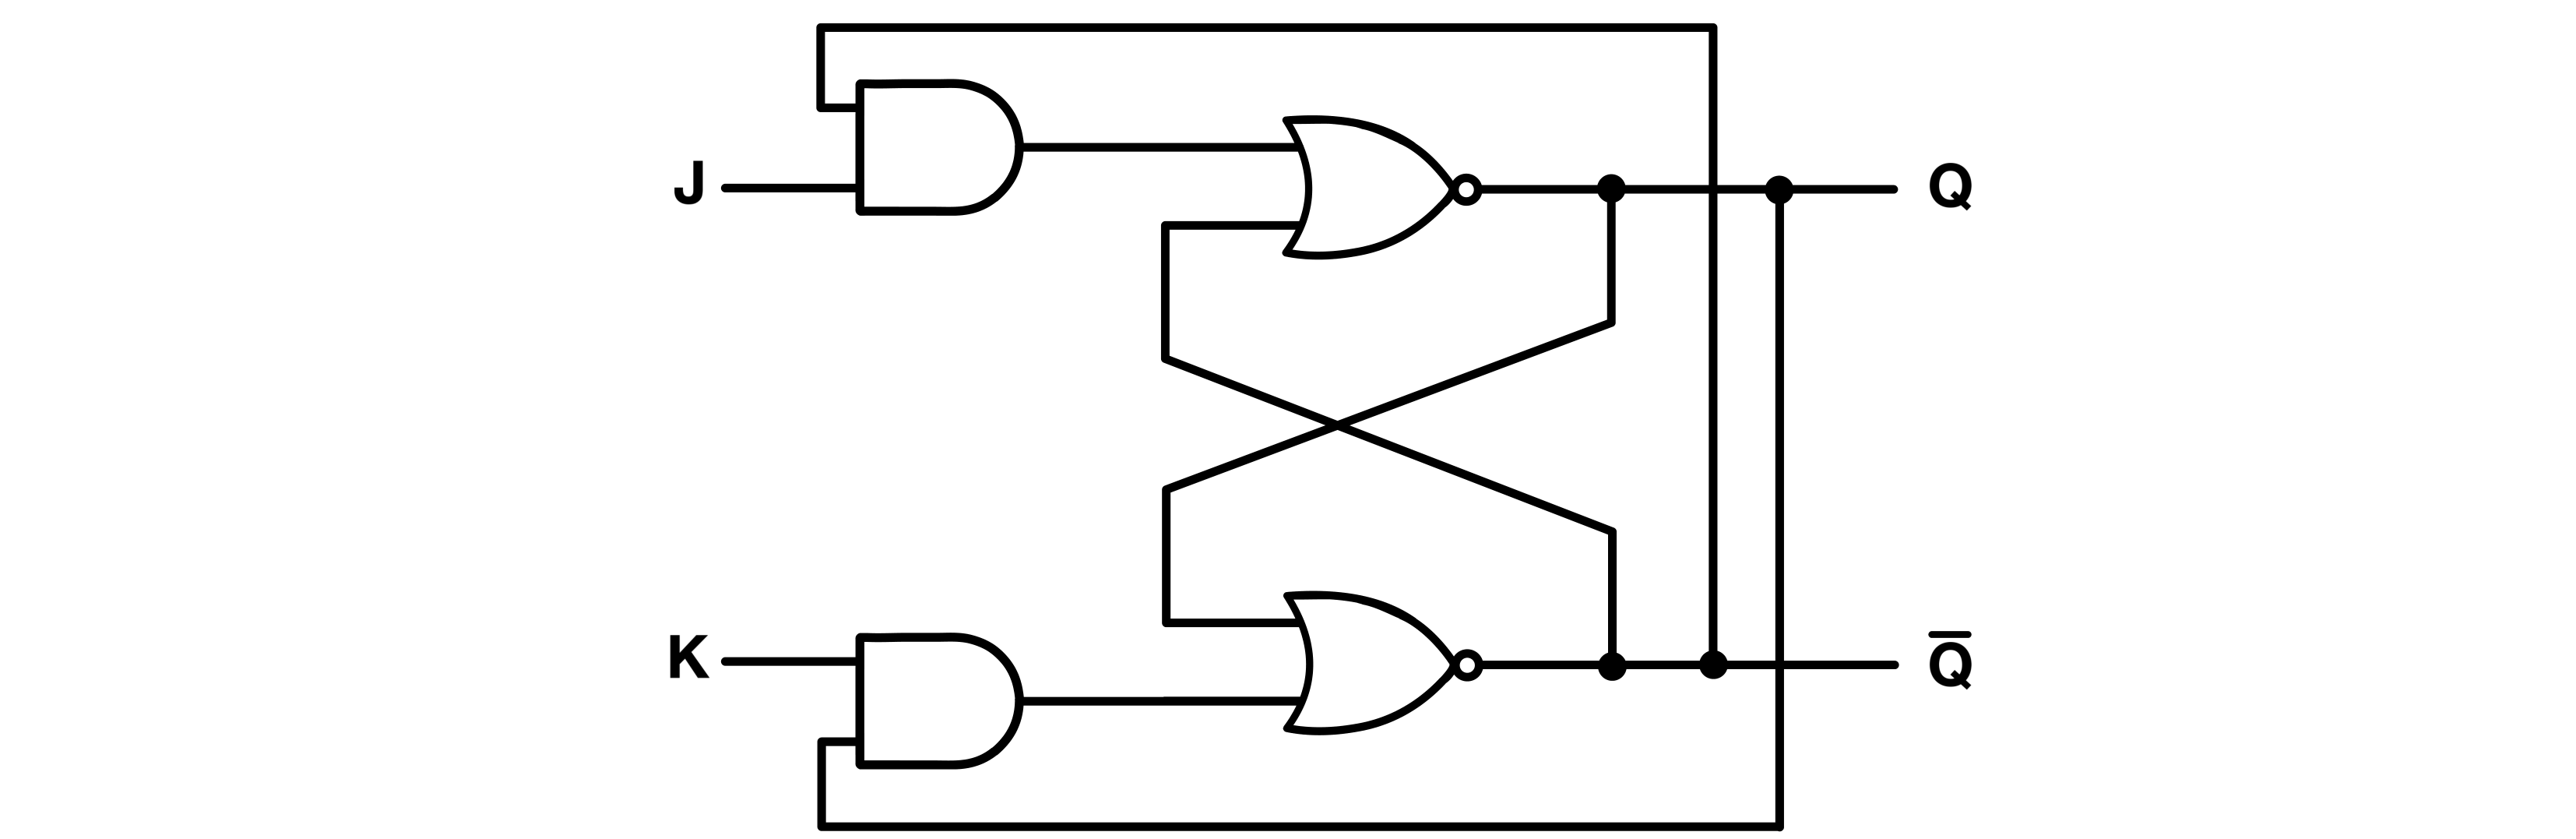 Figure 1: JK latch